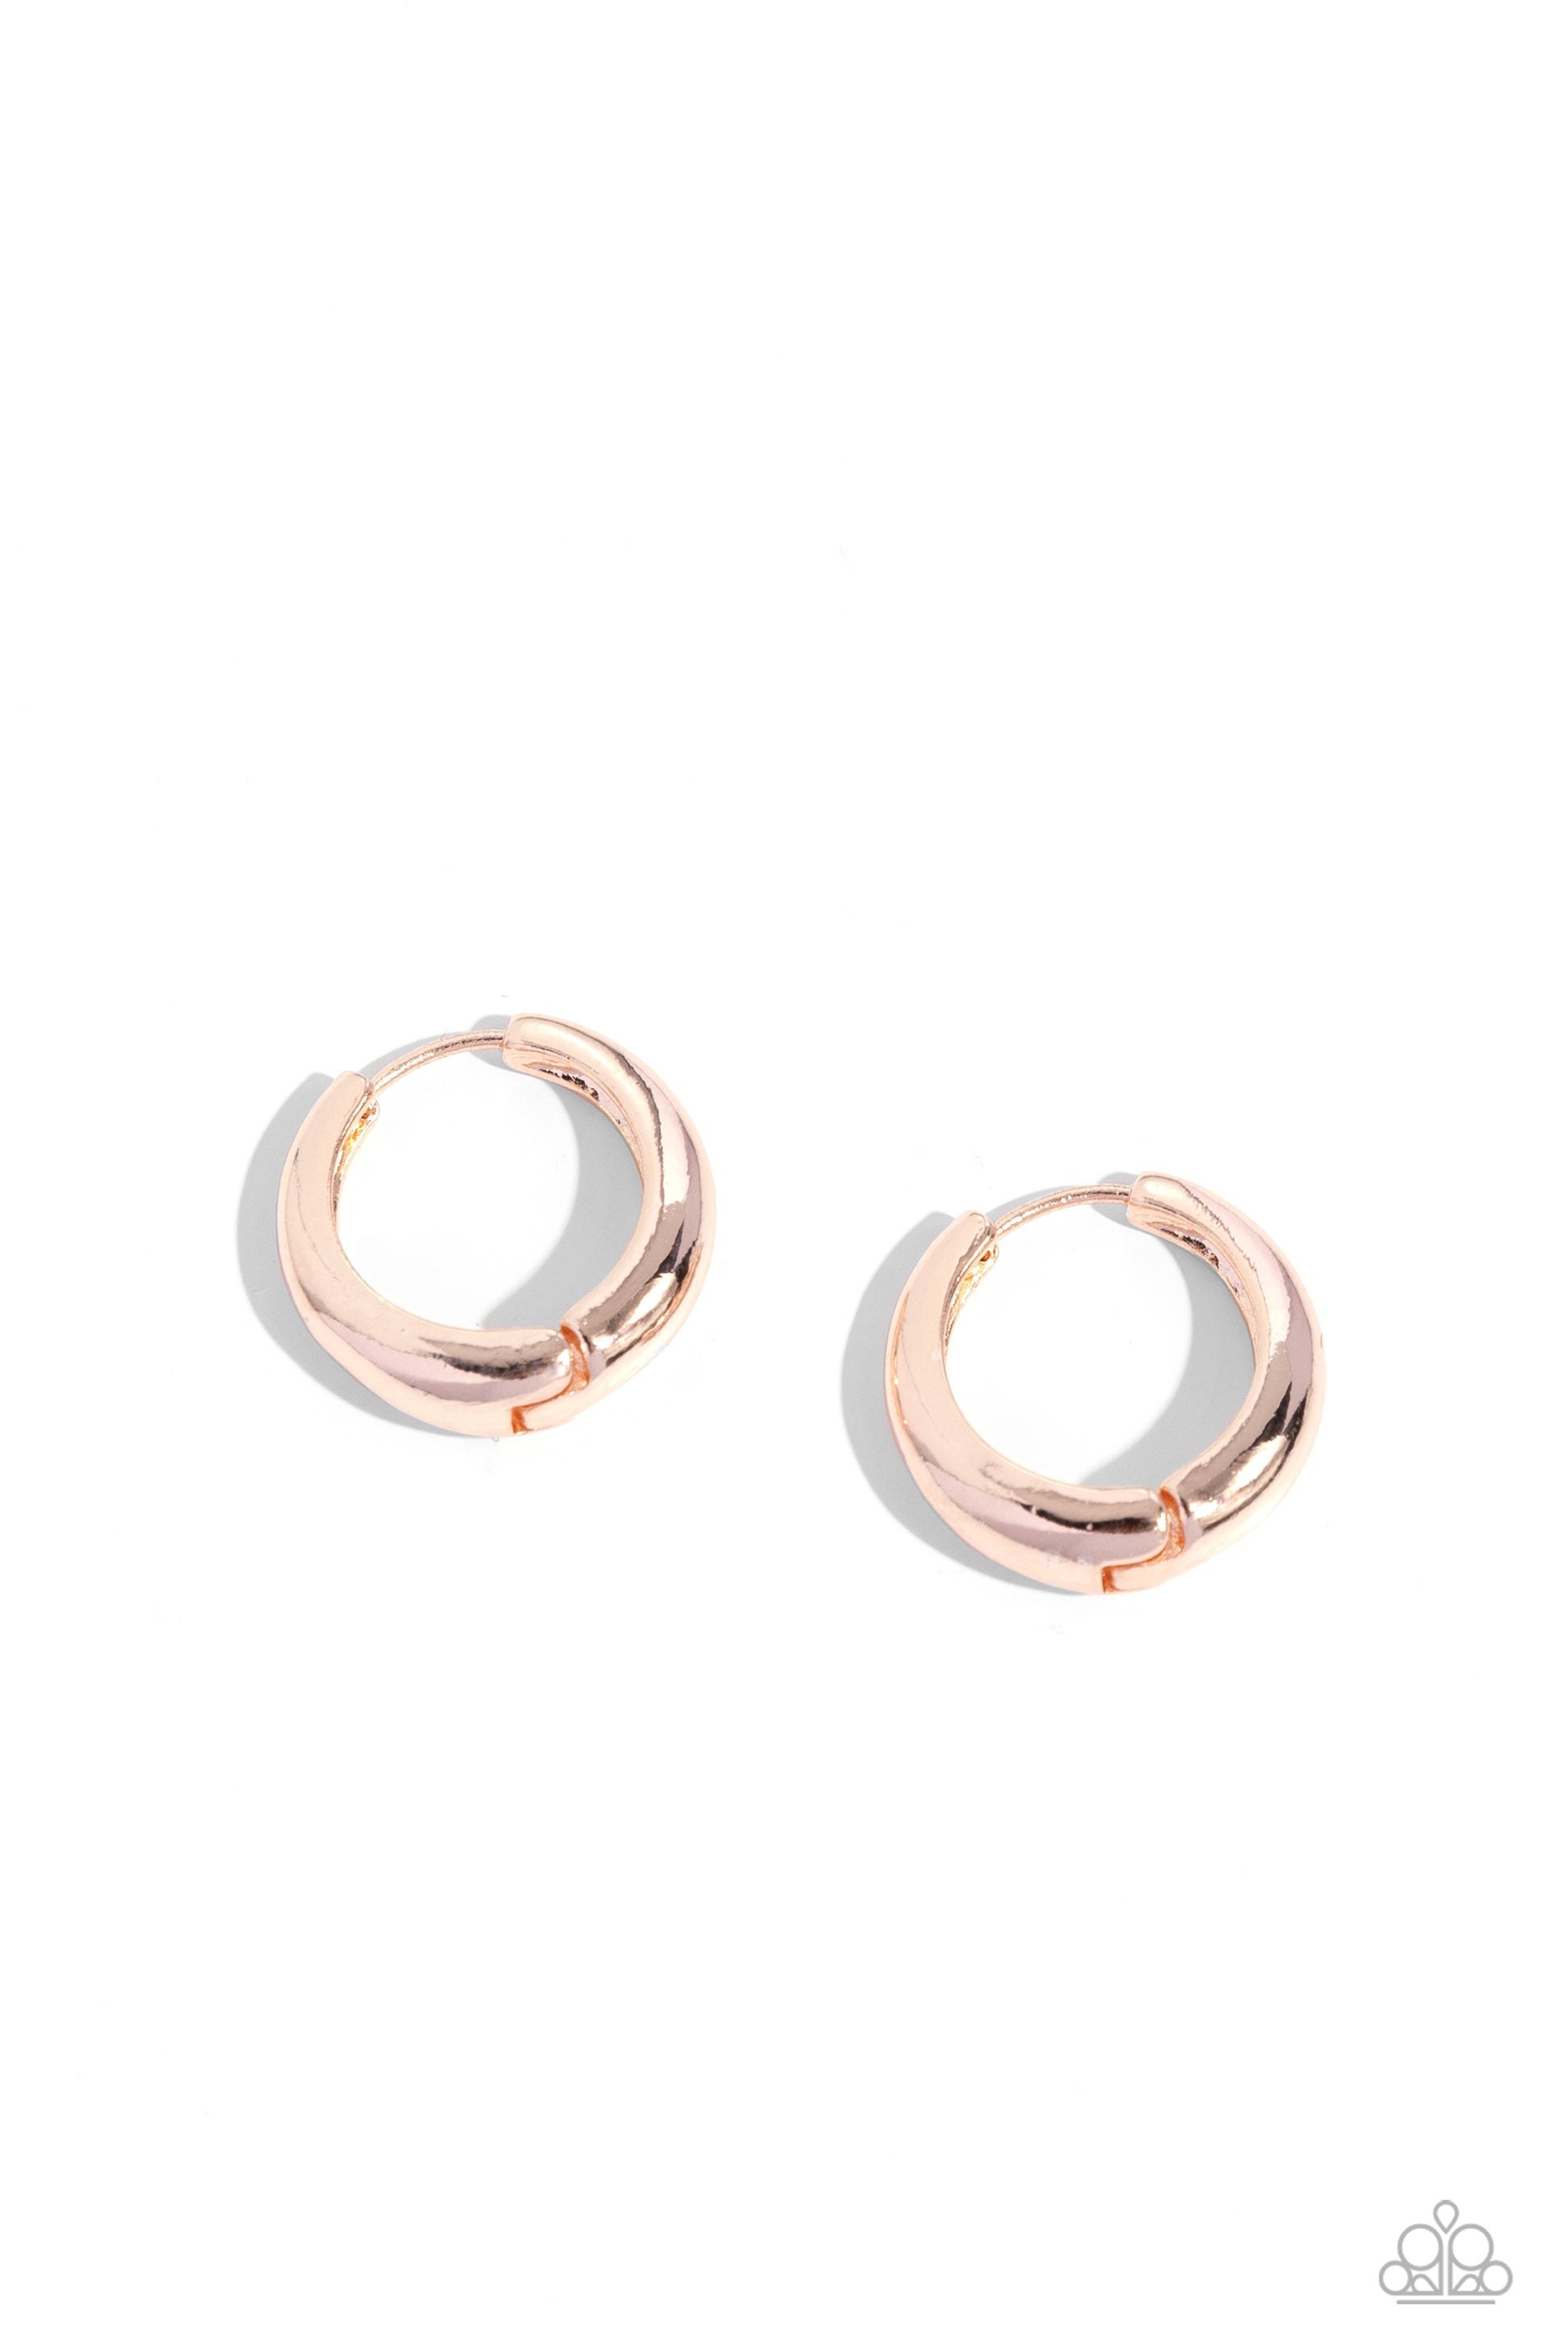 Streamlined Status - rose gold - Paparazzi earrings